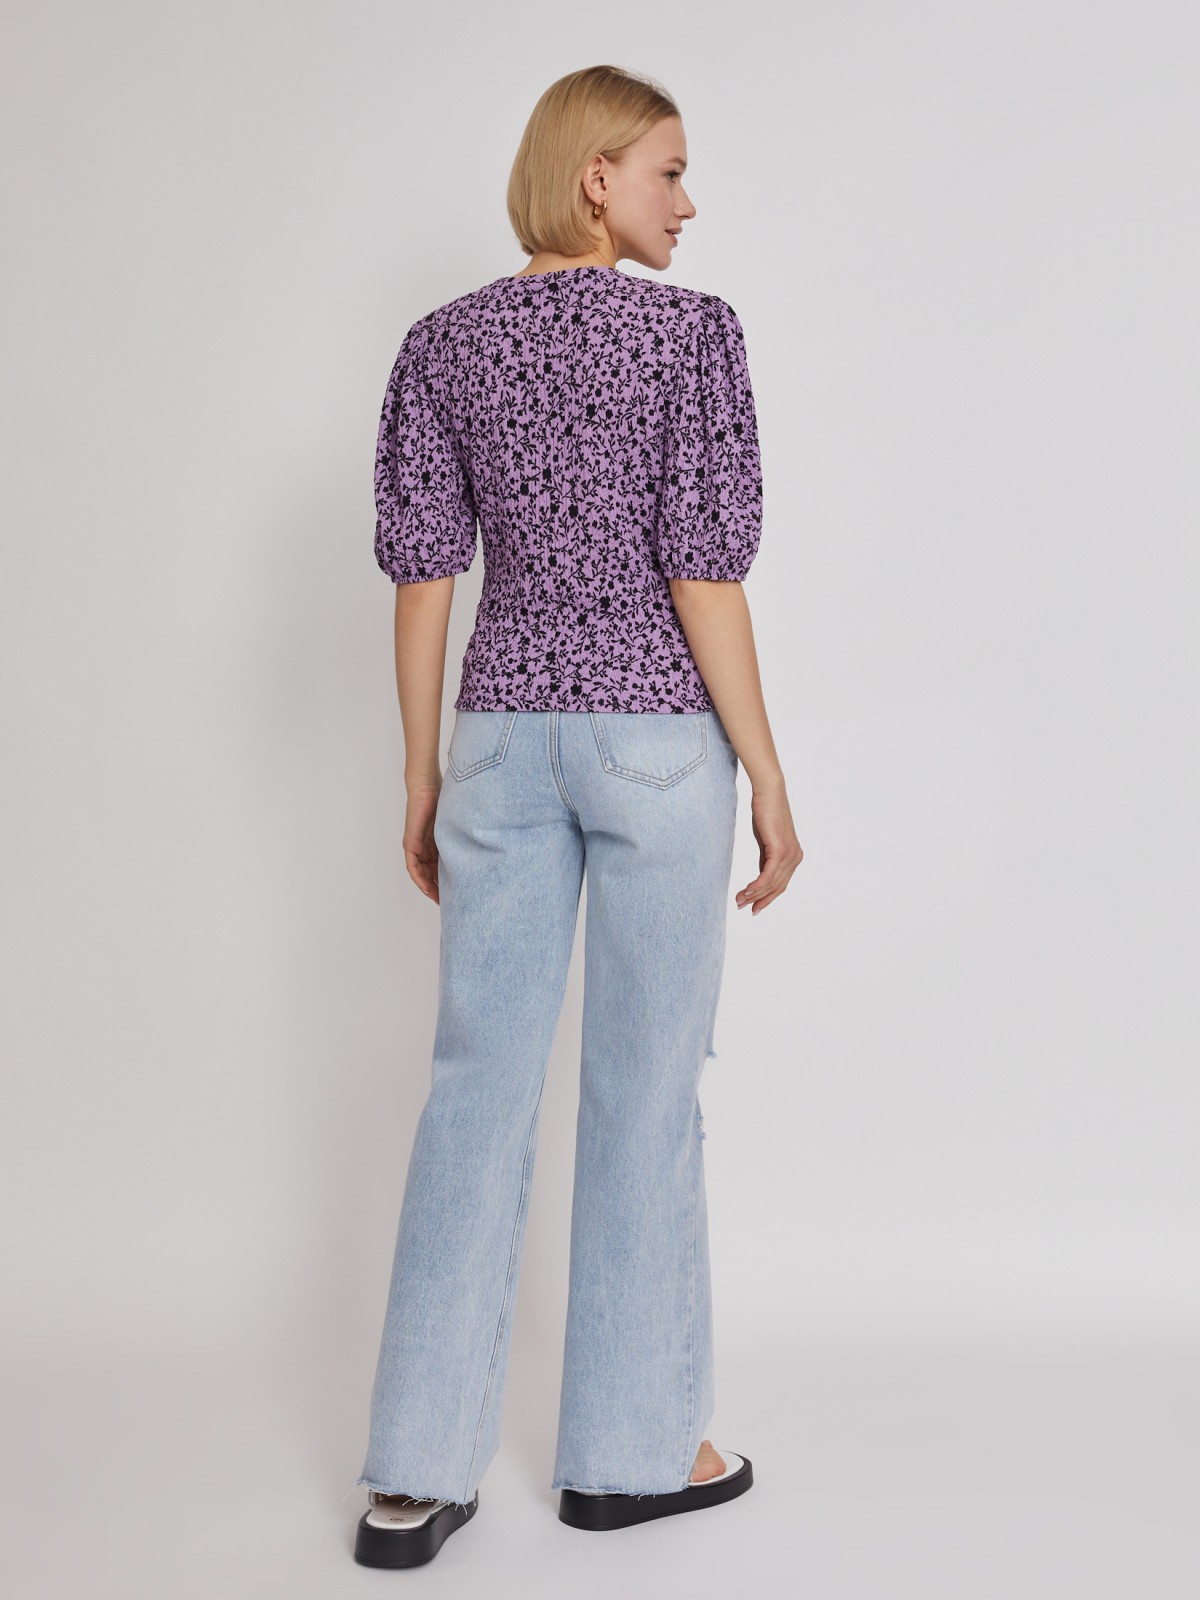 Топ-блузка с коротким рукавом zolla 02321122L041, цвет лиловый, размер XS - фото 6